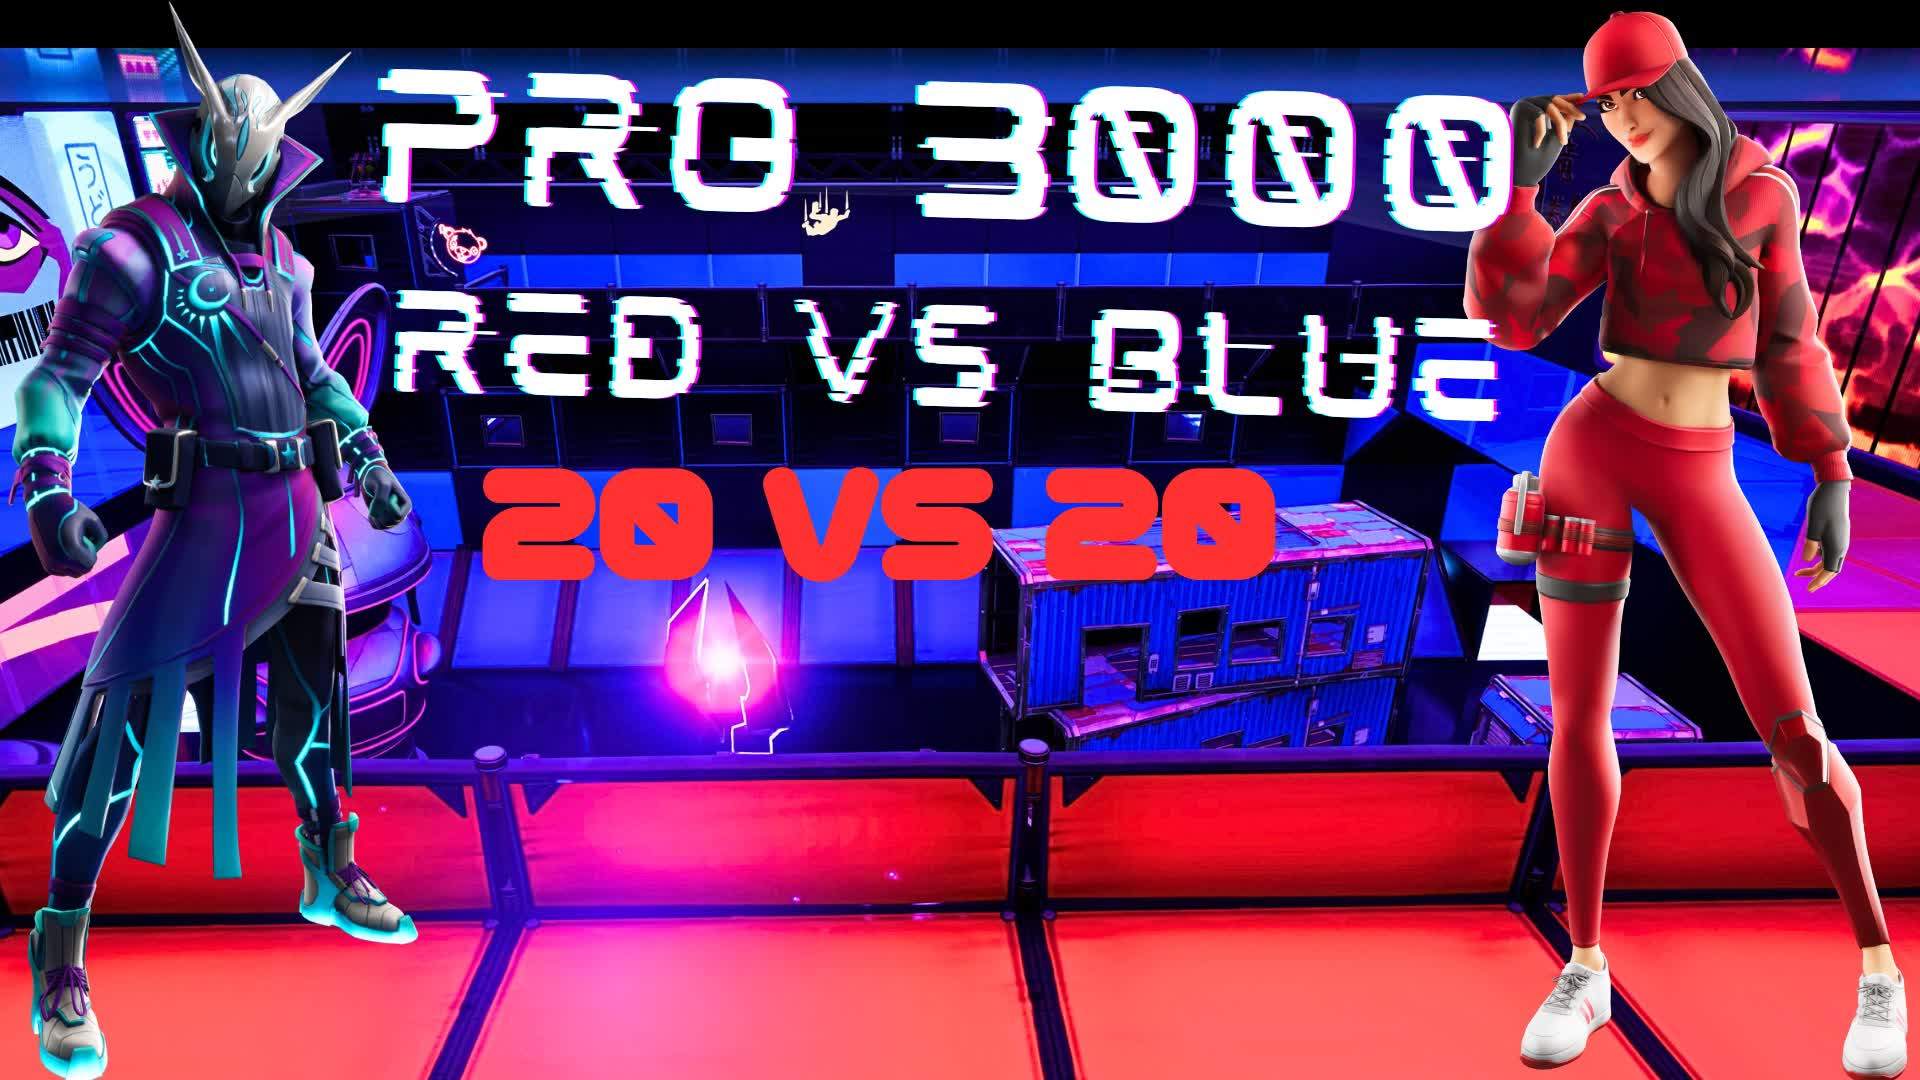 PRO 3000 RED VS BLUE